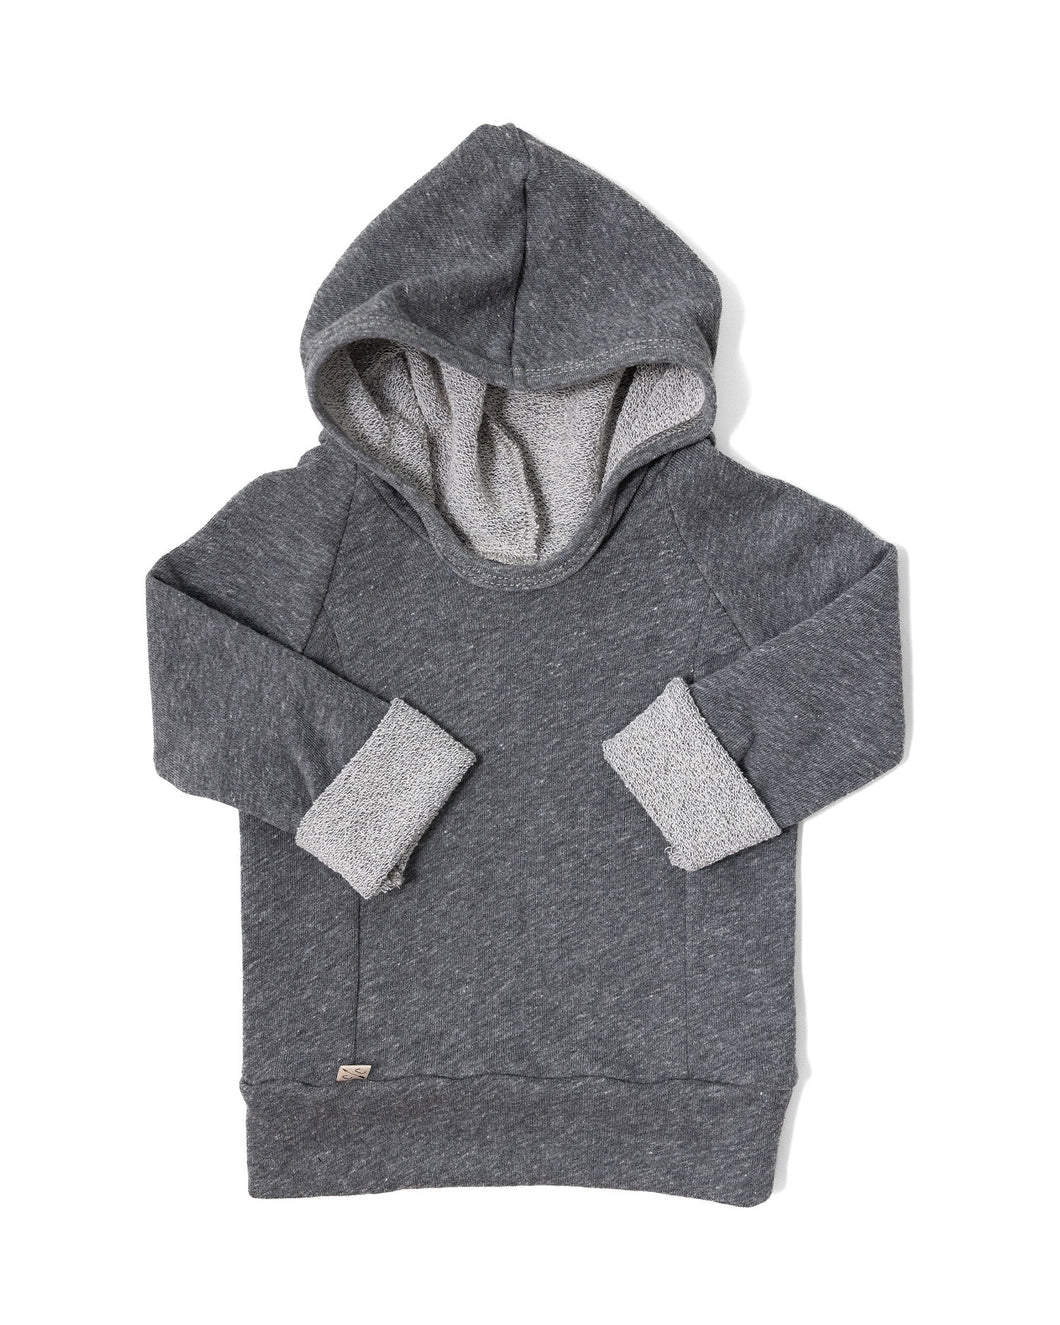 Beach hoodie - heather gray